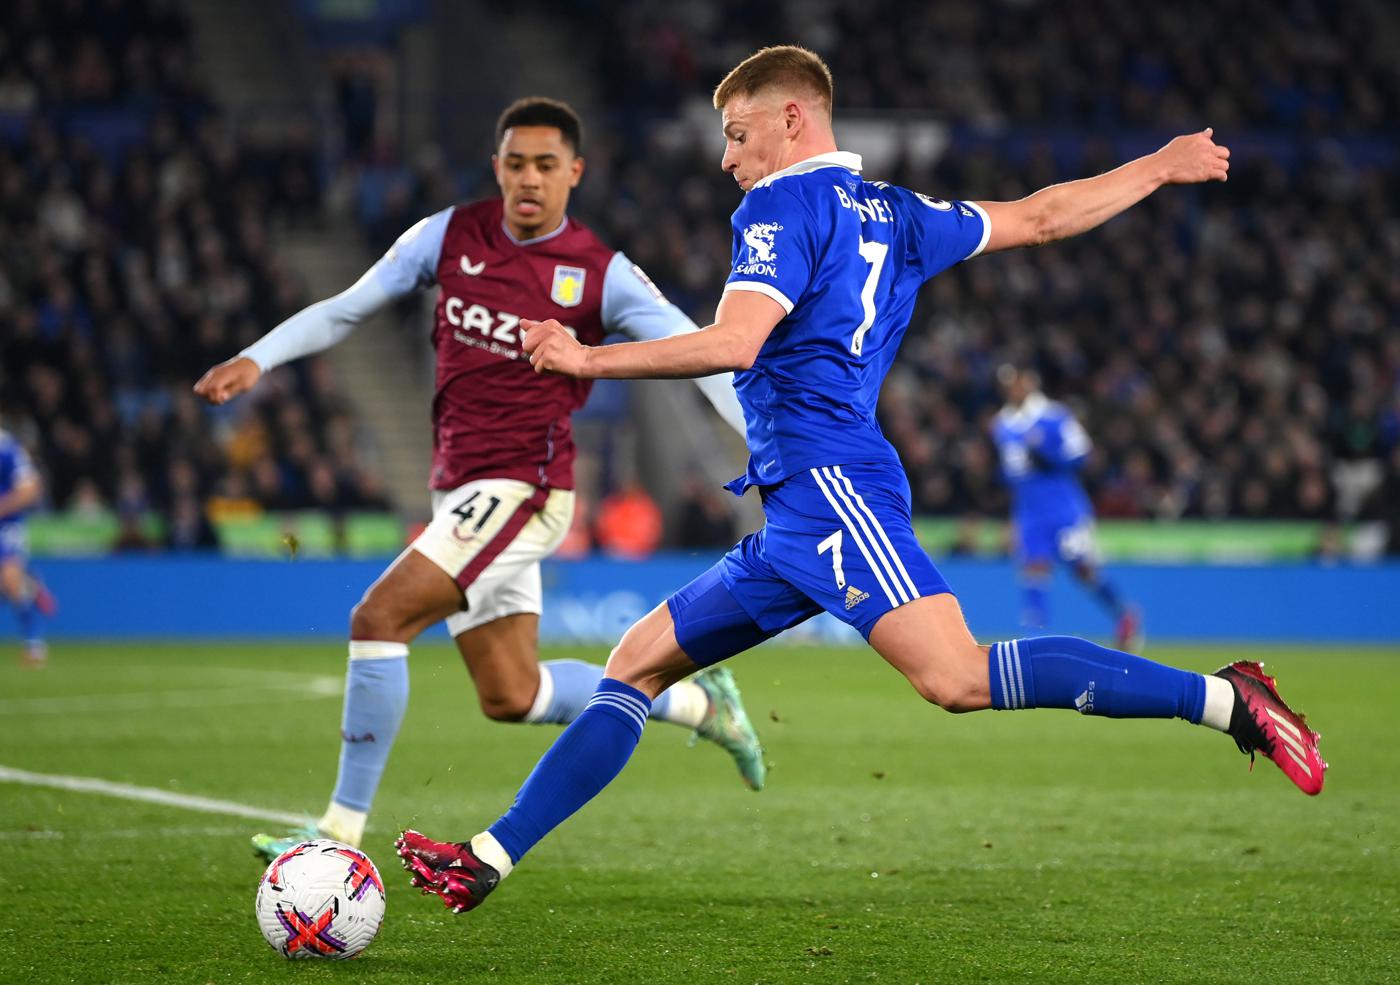 Leicester - Aston Villa - 1:2. English Championship, round 7. Match review, statistics